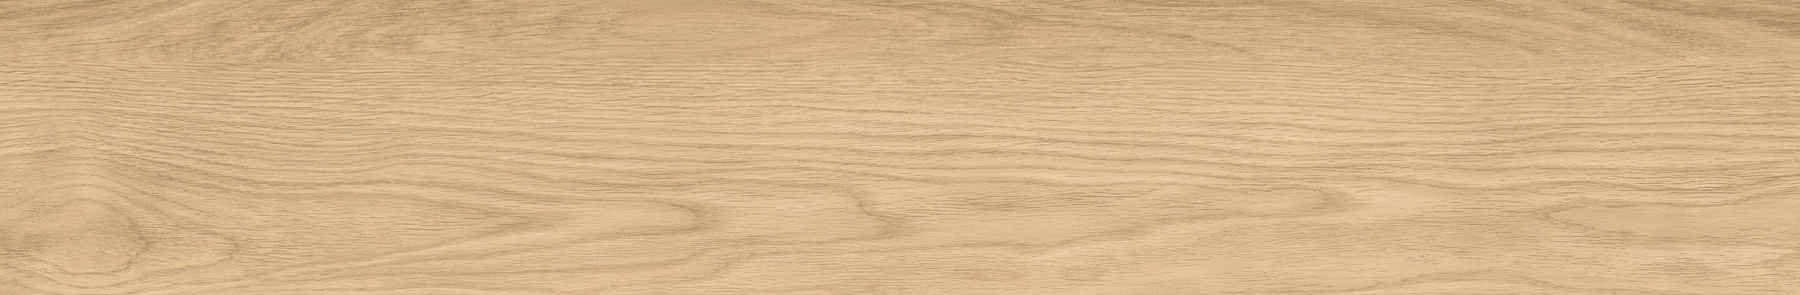 EW1483-15 川島織物セルコン 床タイル エグザウッド ブレッザオーク 川島織物セルコン フロアタイル